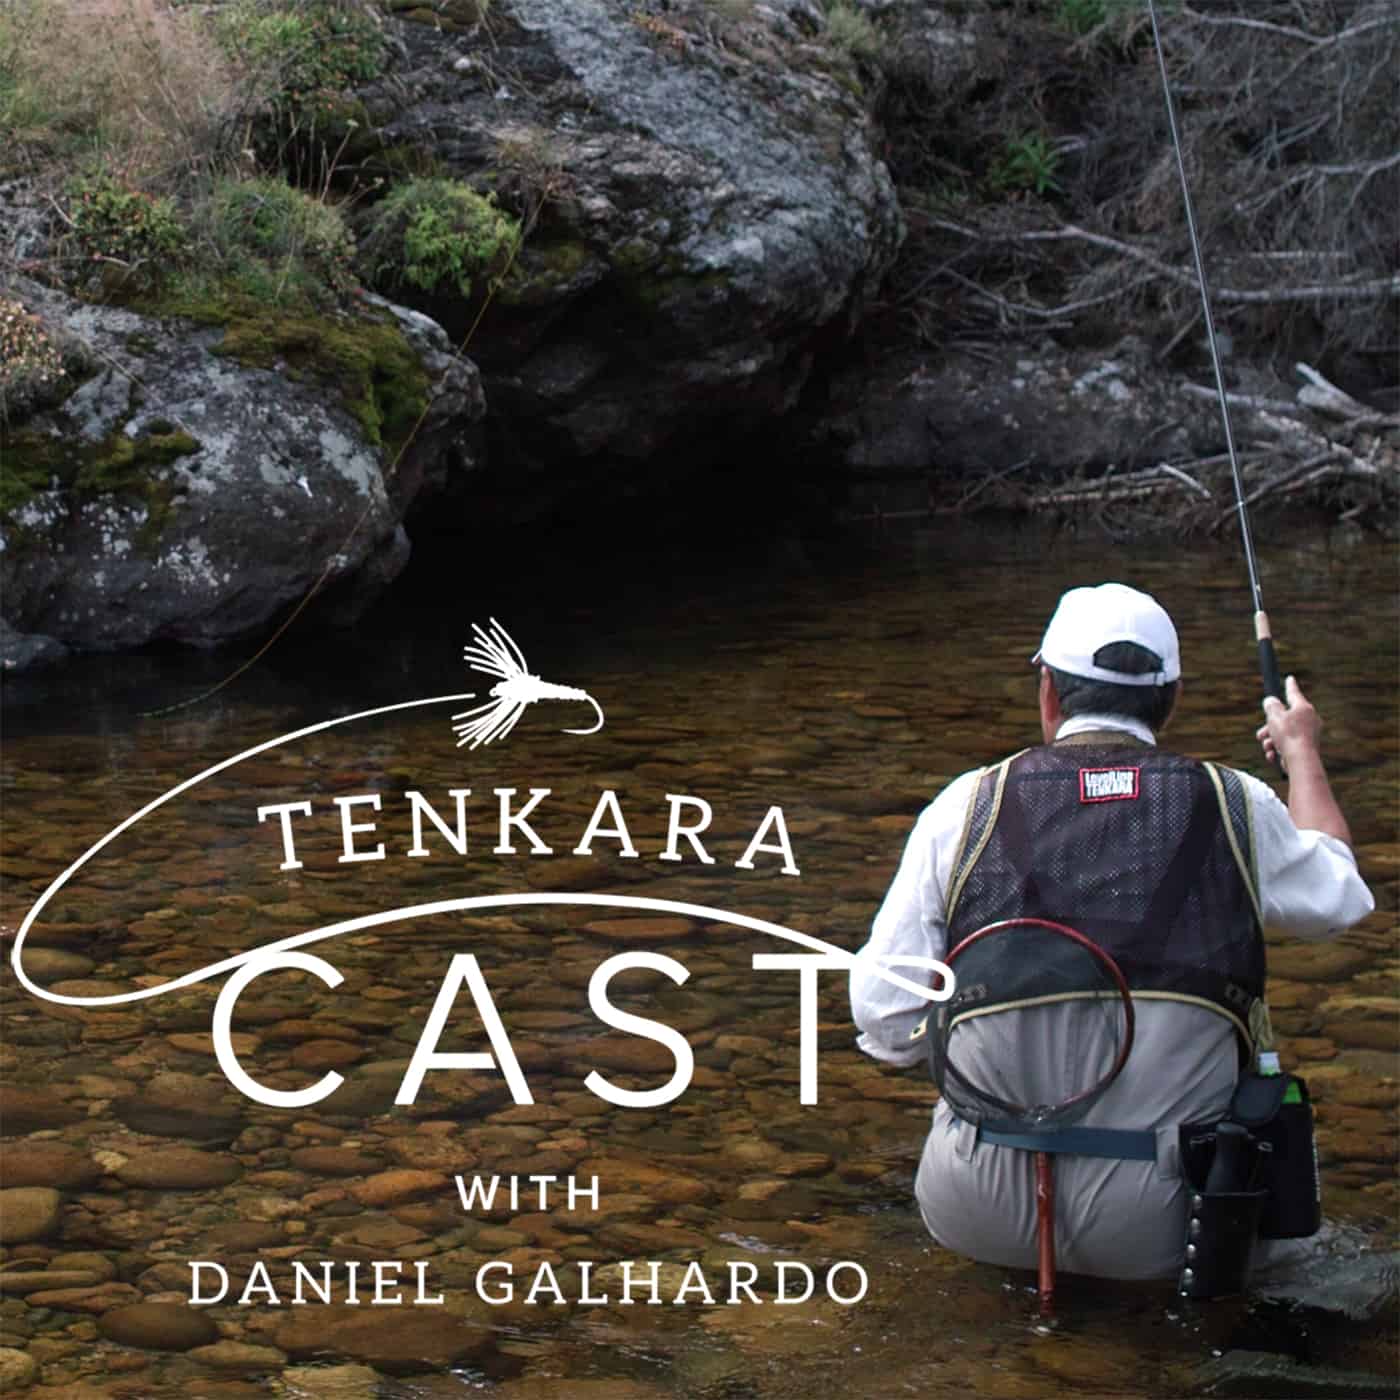 Tenkara Cast: 2 new episodes